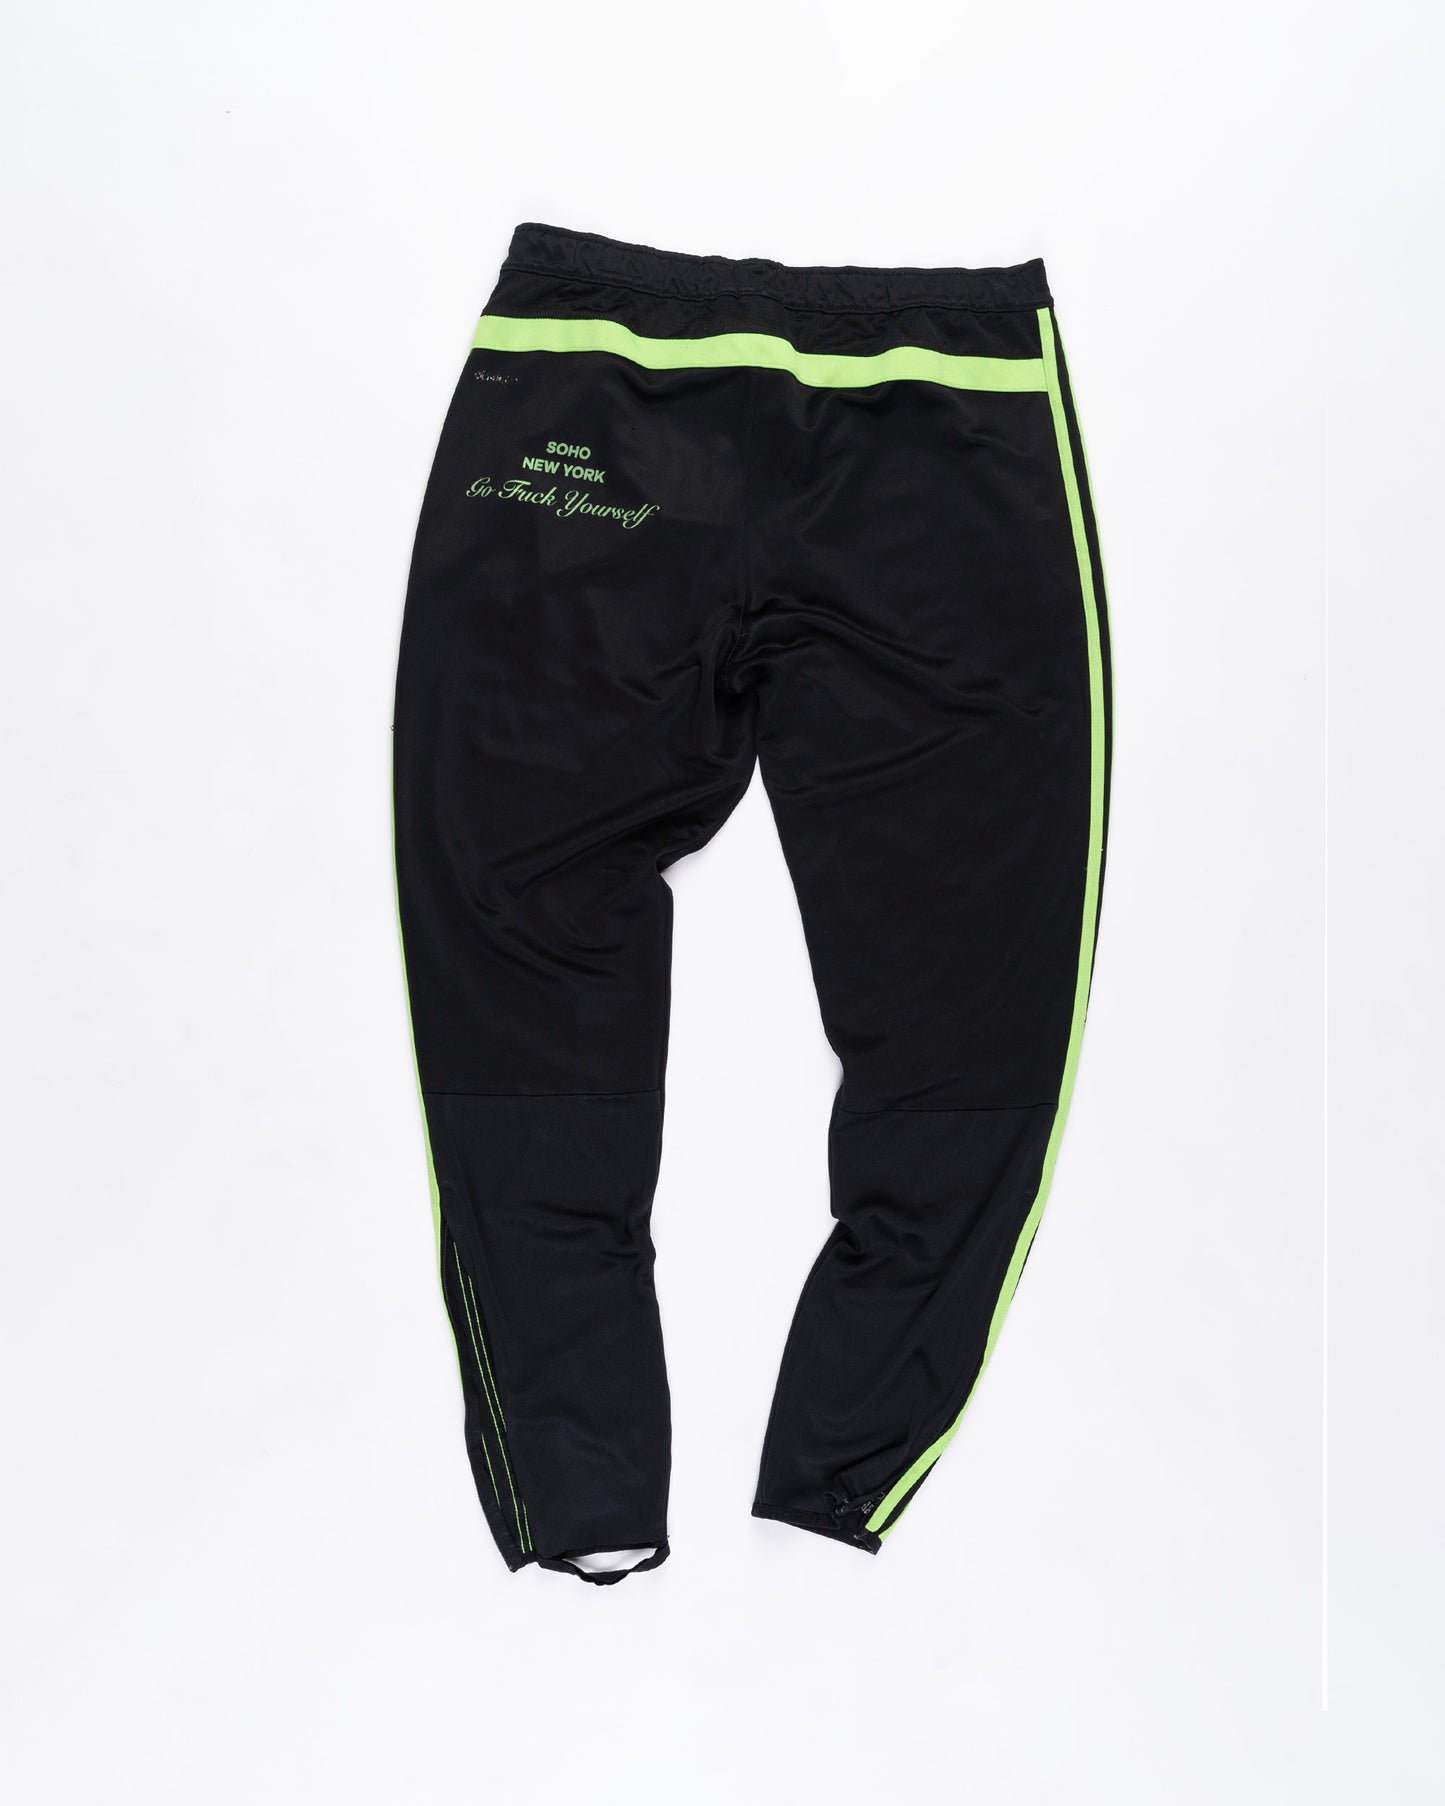 Adidas Soccer Sweatpants Size: Large